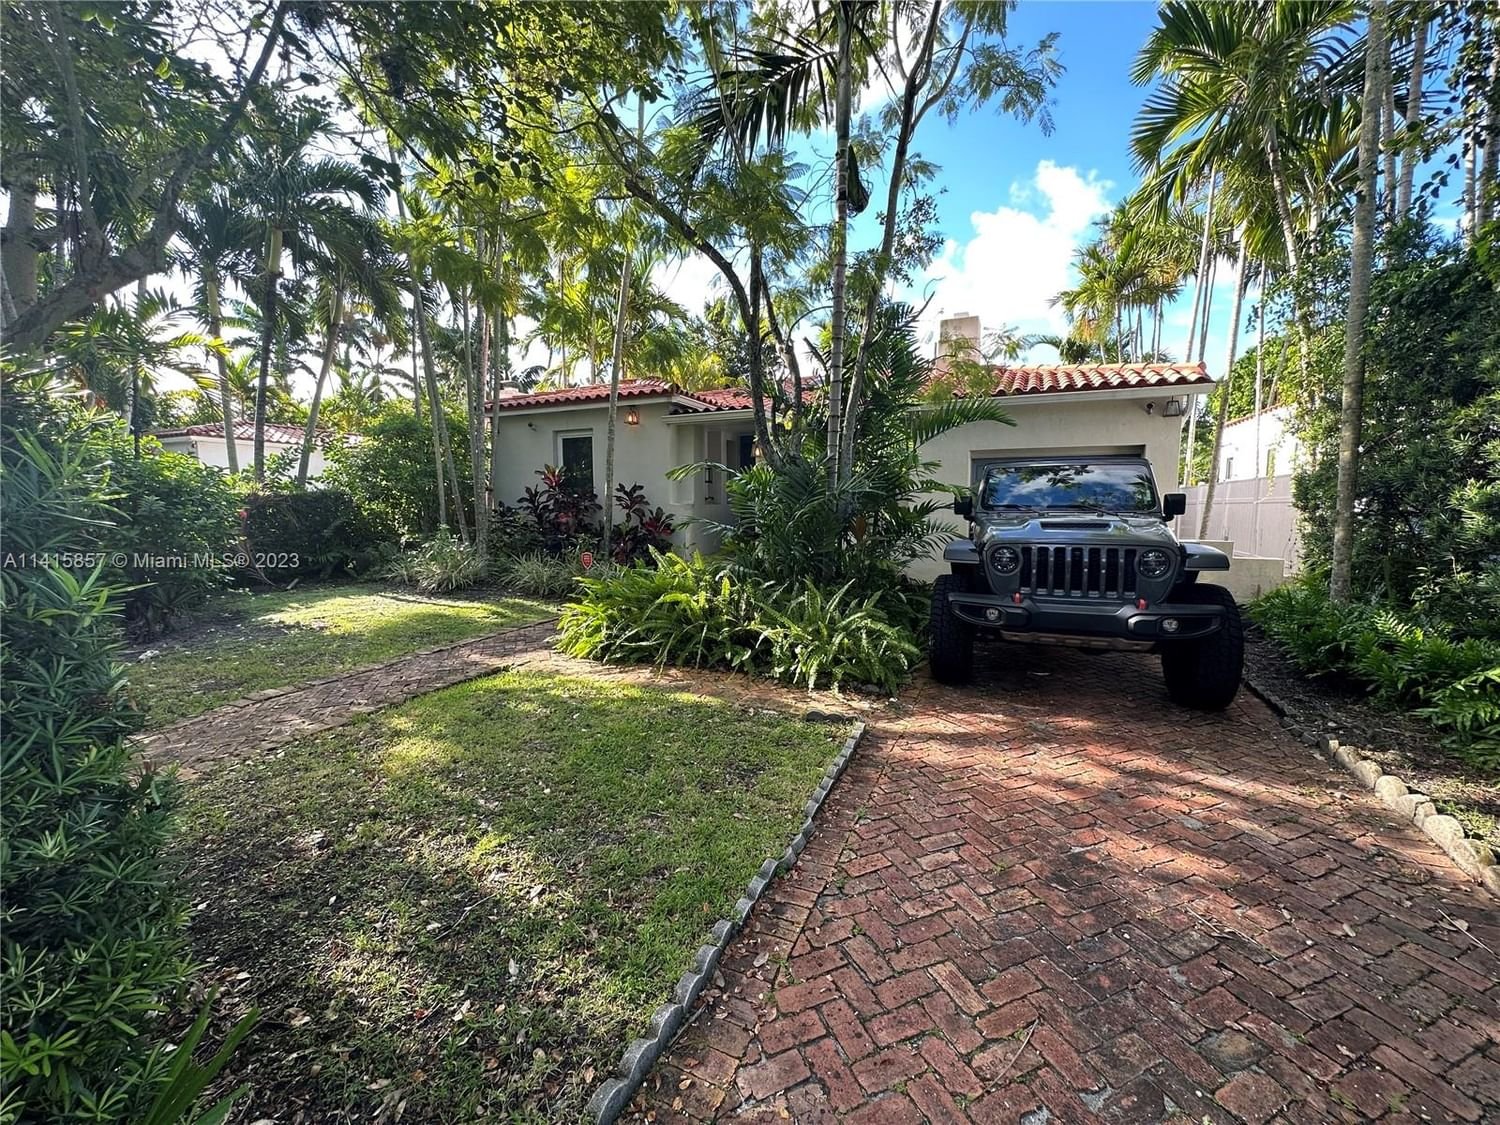 Real estate property located at 708 75th St, Miami-Dade County, Miami, FL